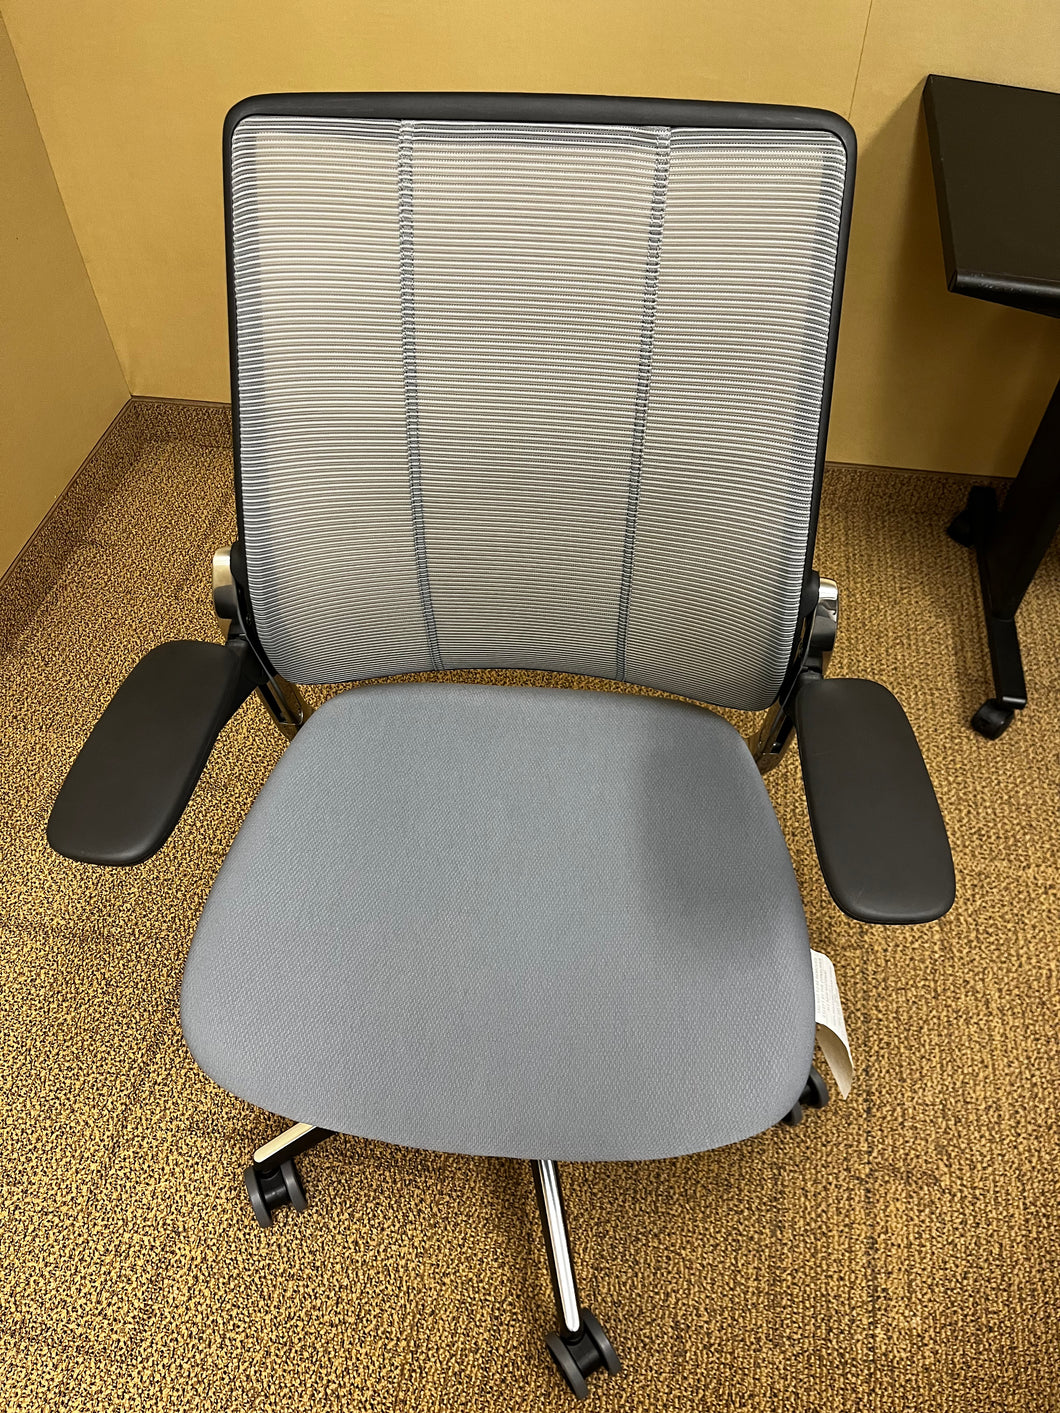 Humanscale Diffrient Smart Chair